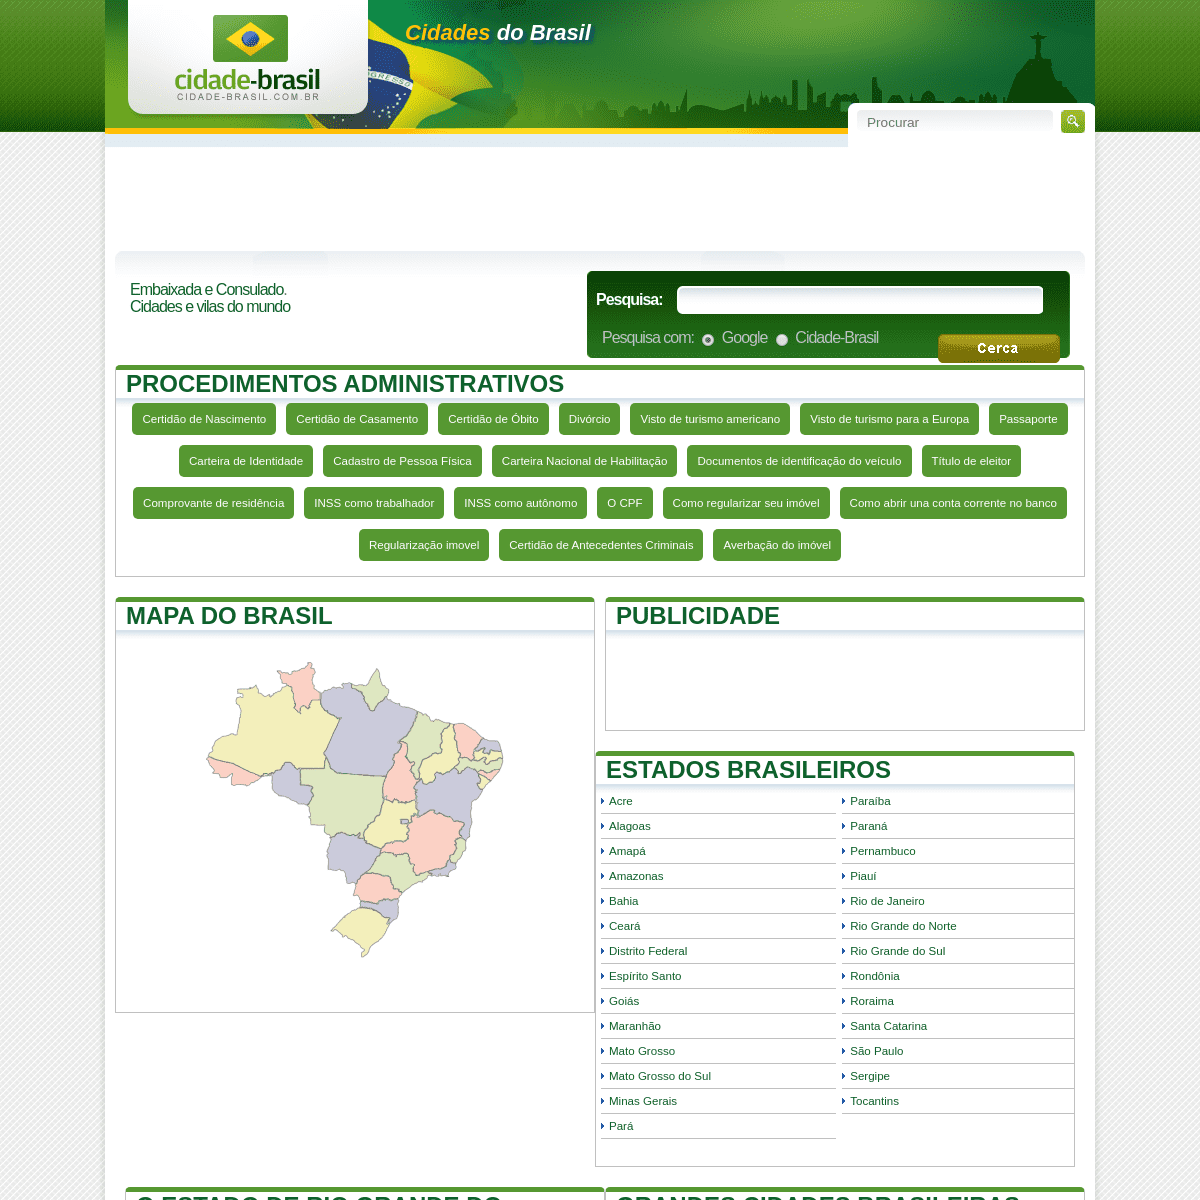 A complete backup of cidade-brasil.com.br